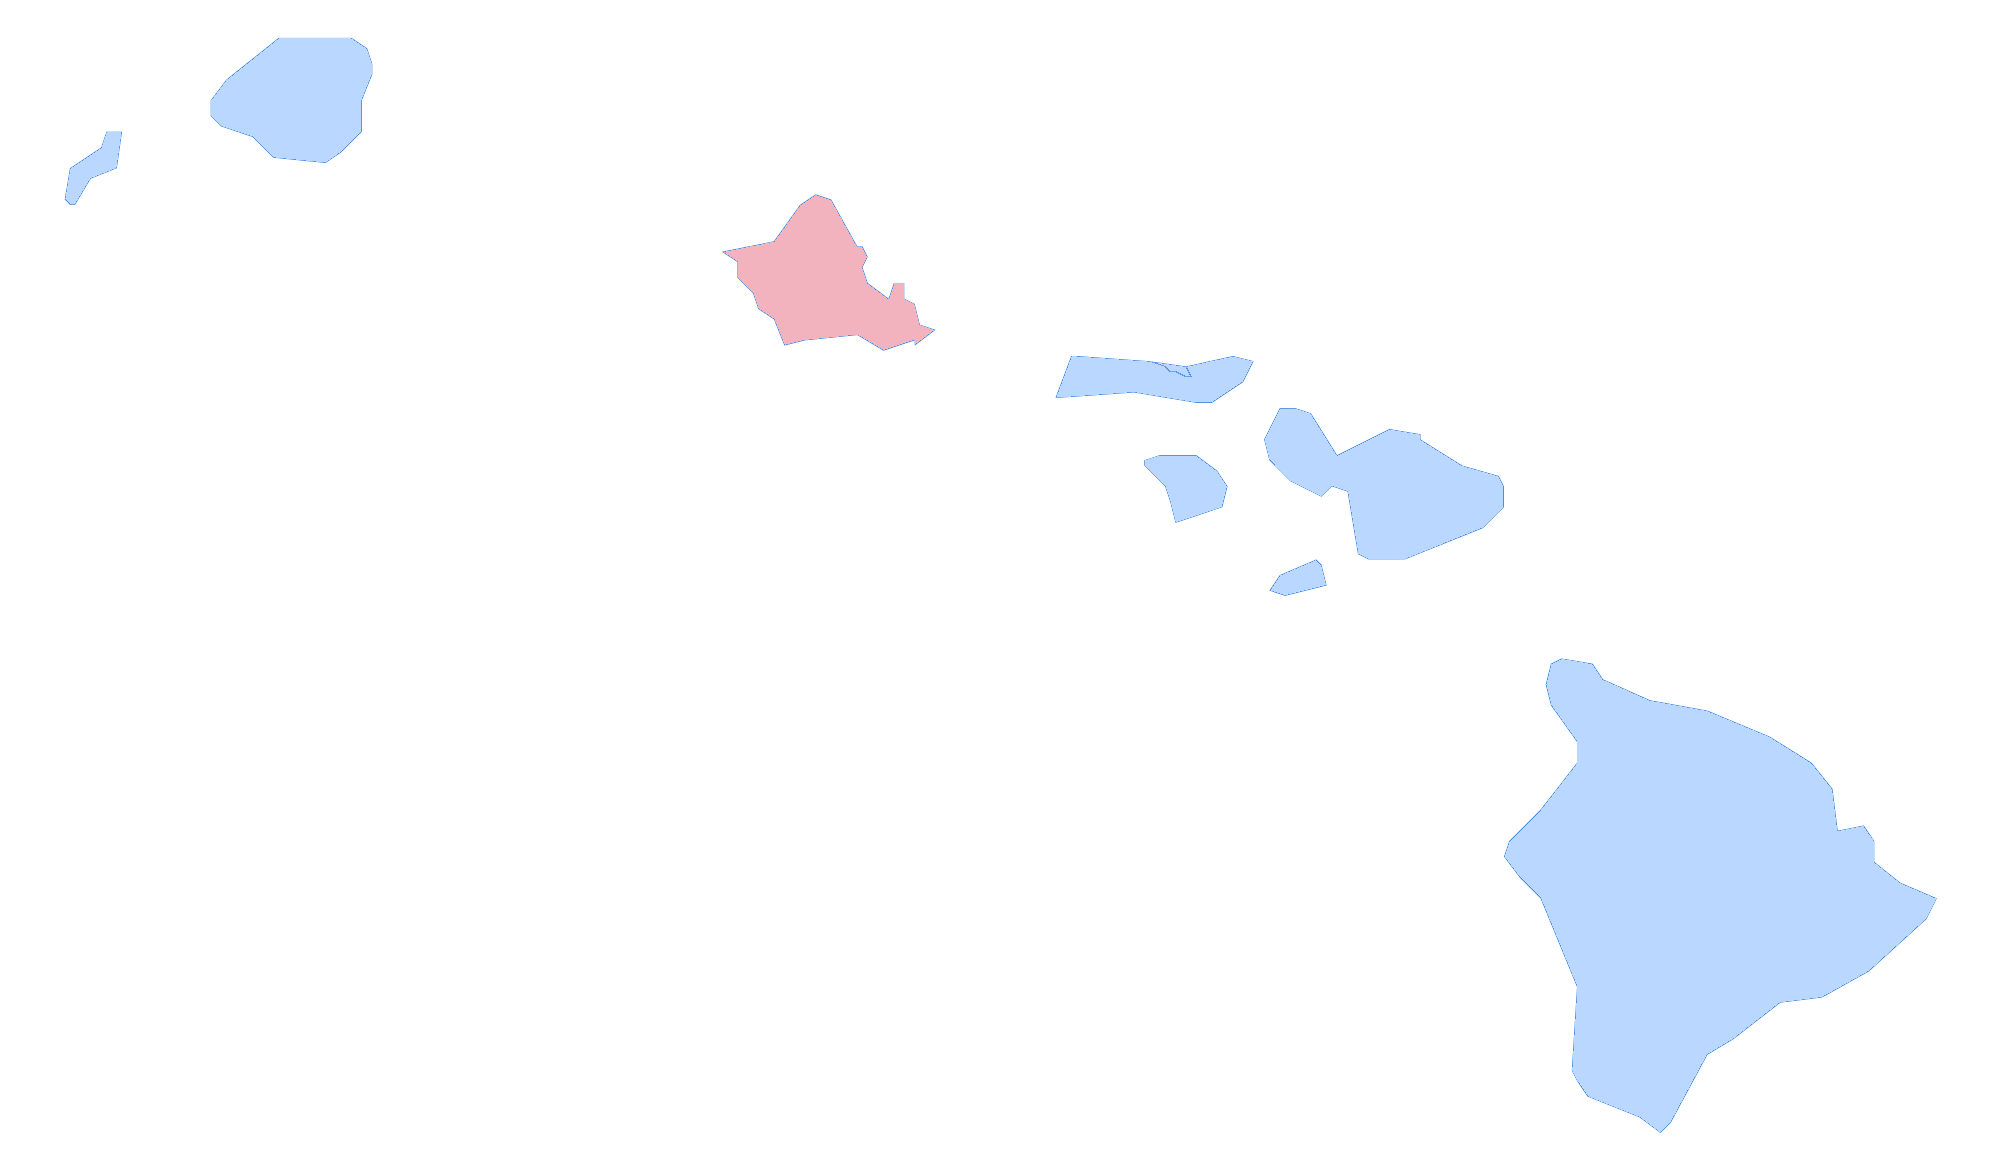 Hawaii_Presidential_Election_Results_2016_Republican_Landslide_15.06%.png